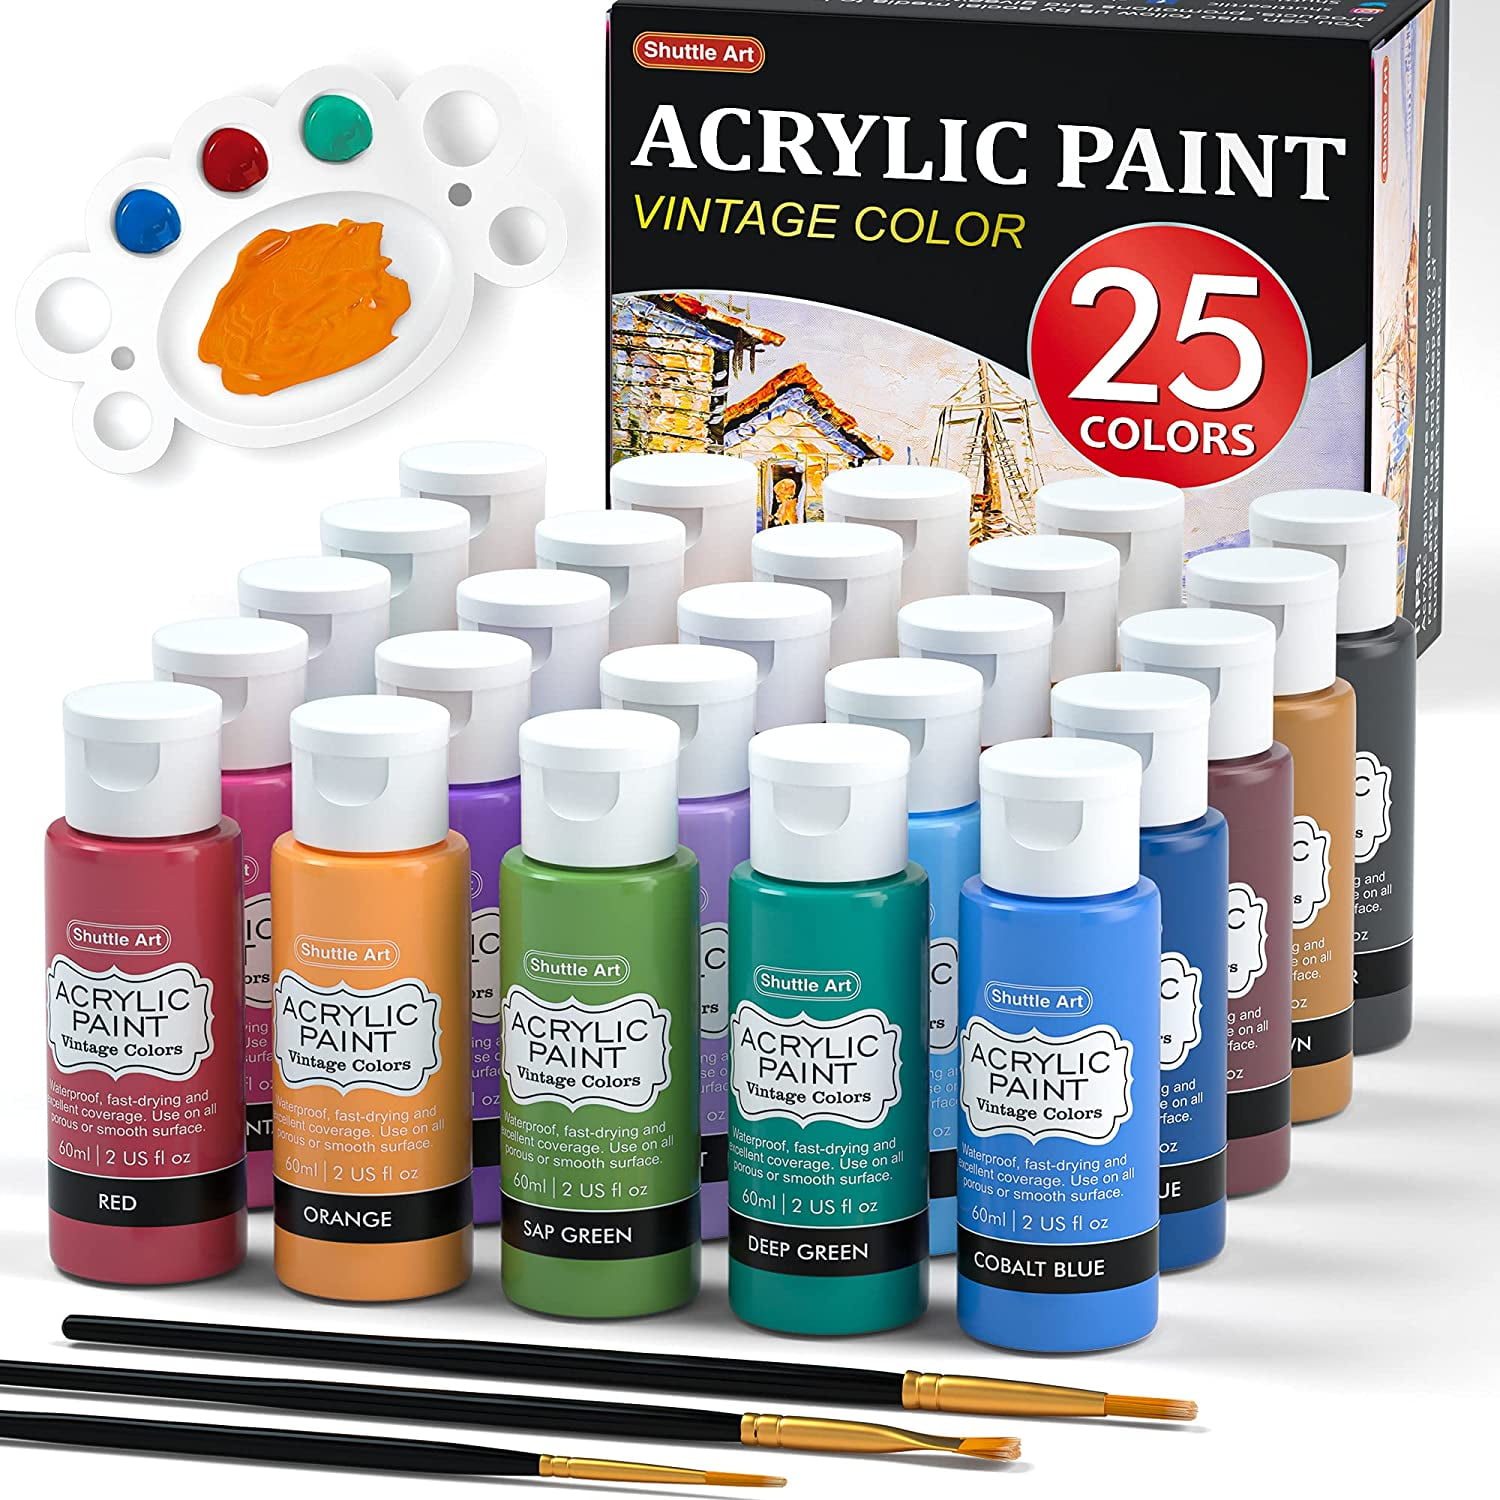 Acrylic Paint, Shuttle Art 25 Colors Acrylic Paint Set, 2oz/60ml Bottles,  Rich Pigmented, Waterproof, Premium Acrylic Paints for Artists, Beginners